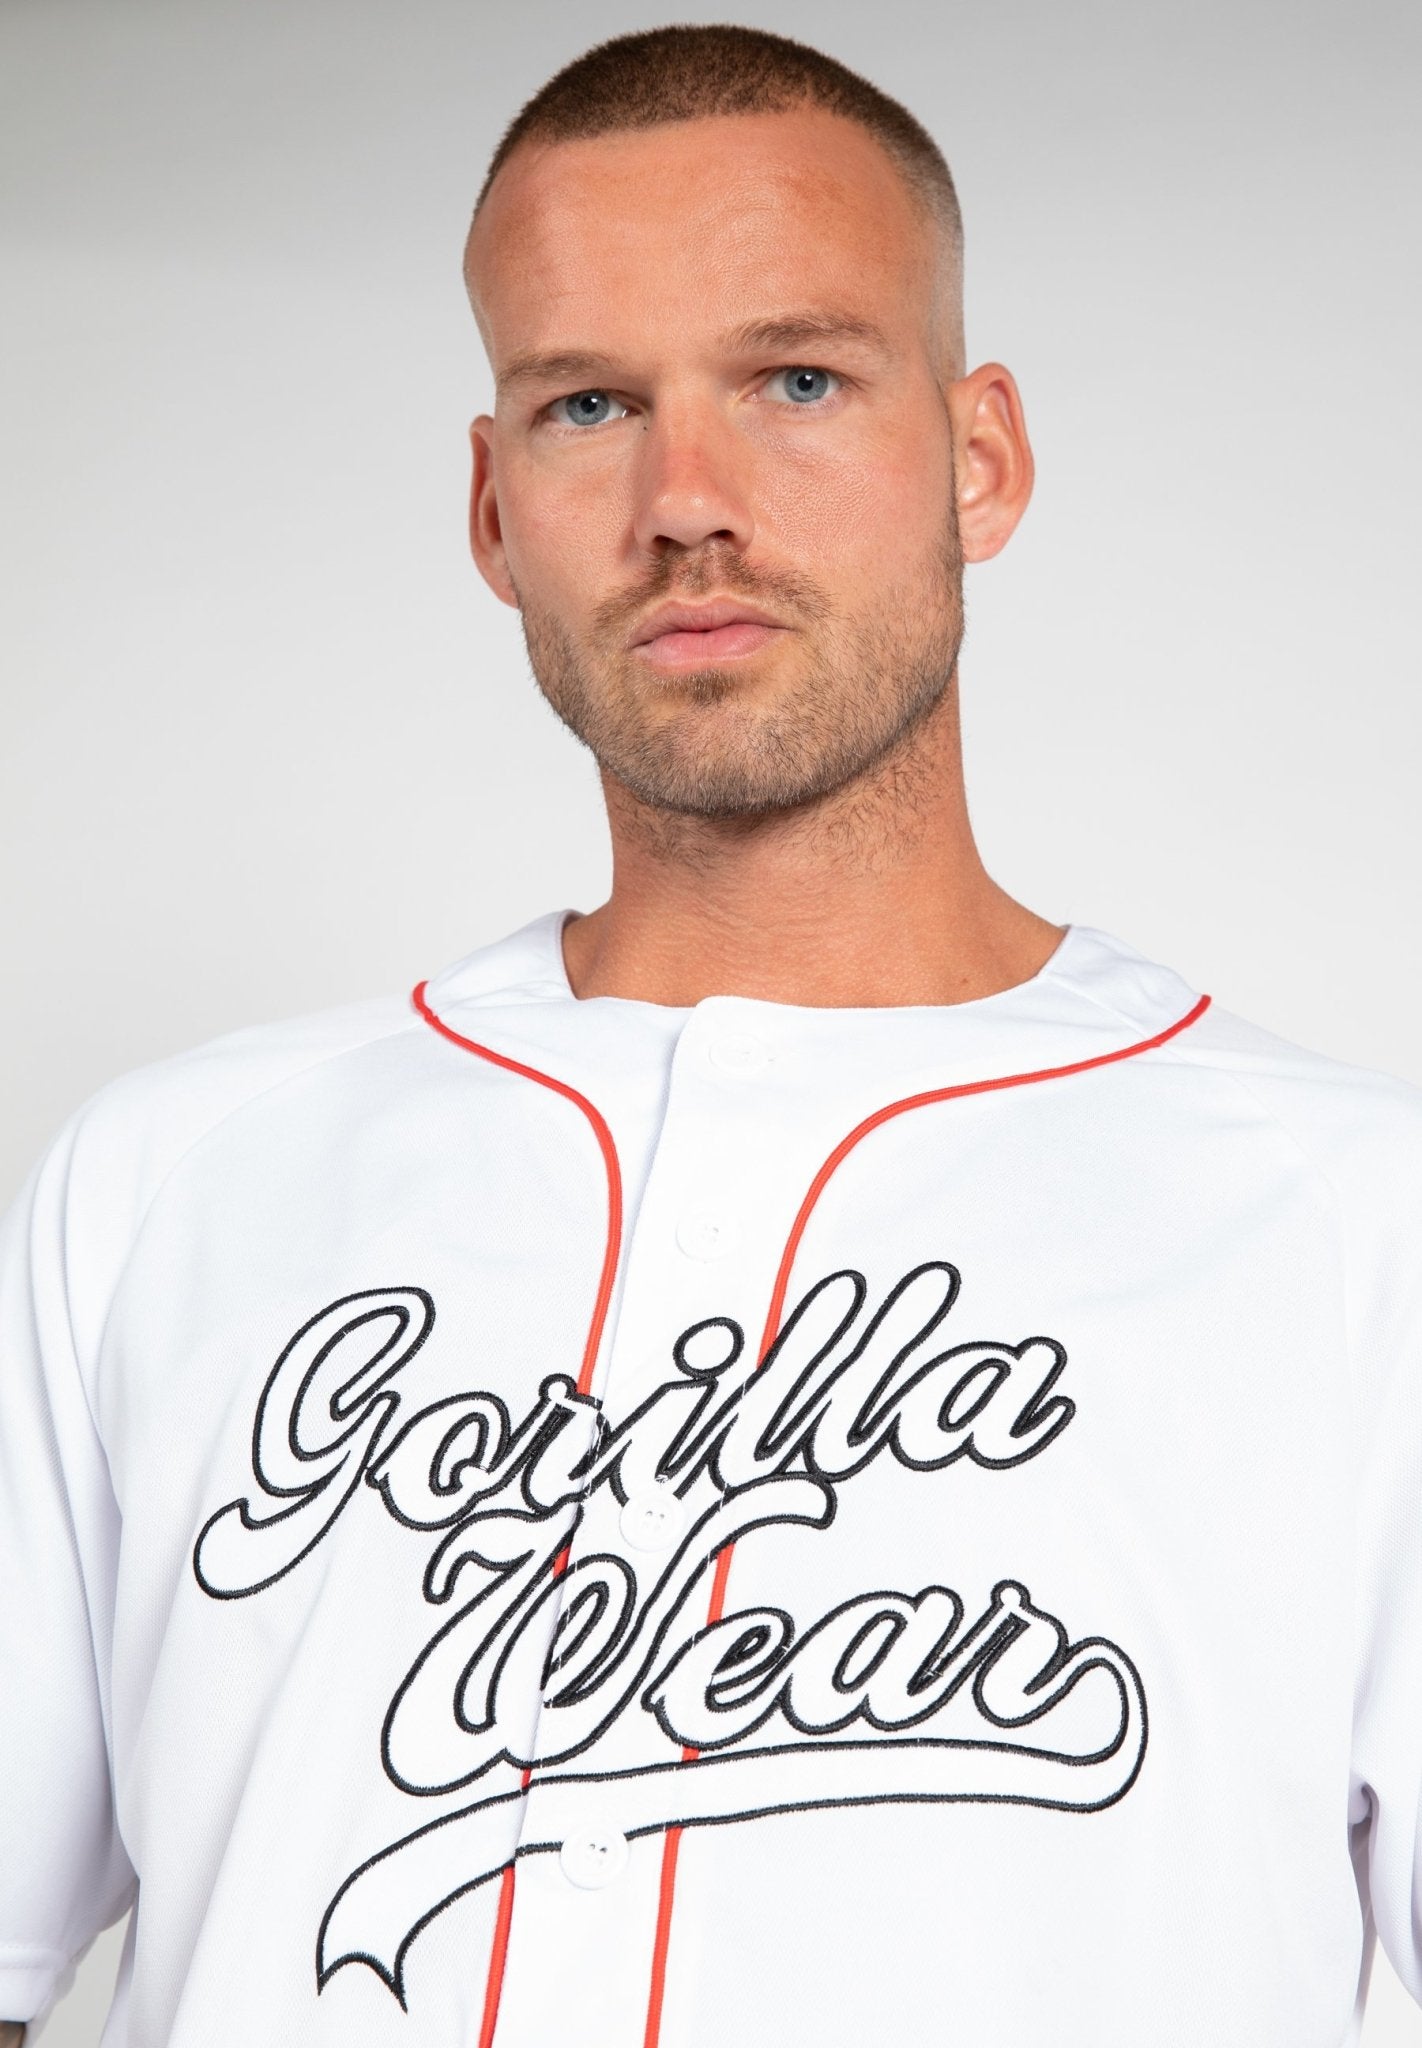 82 Baseball Jersey - White Gorilla Wear